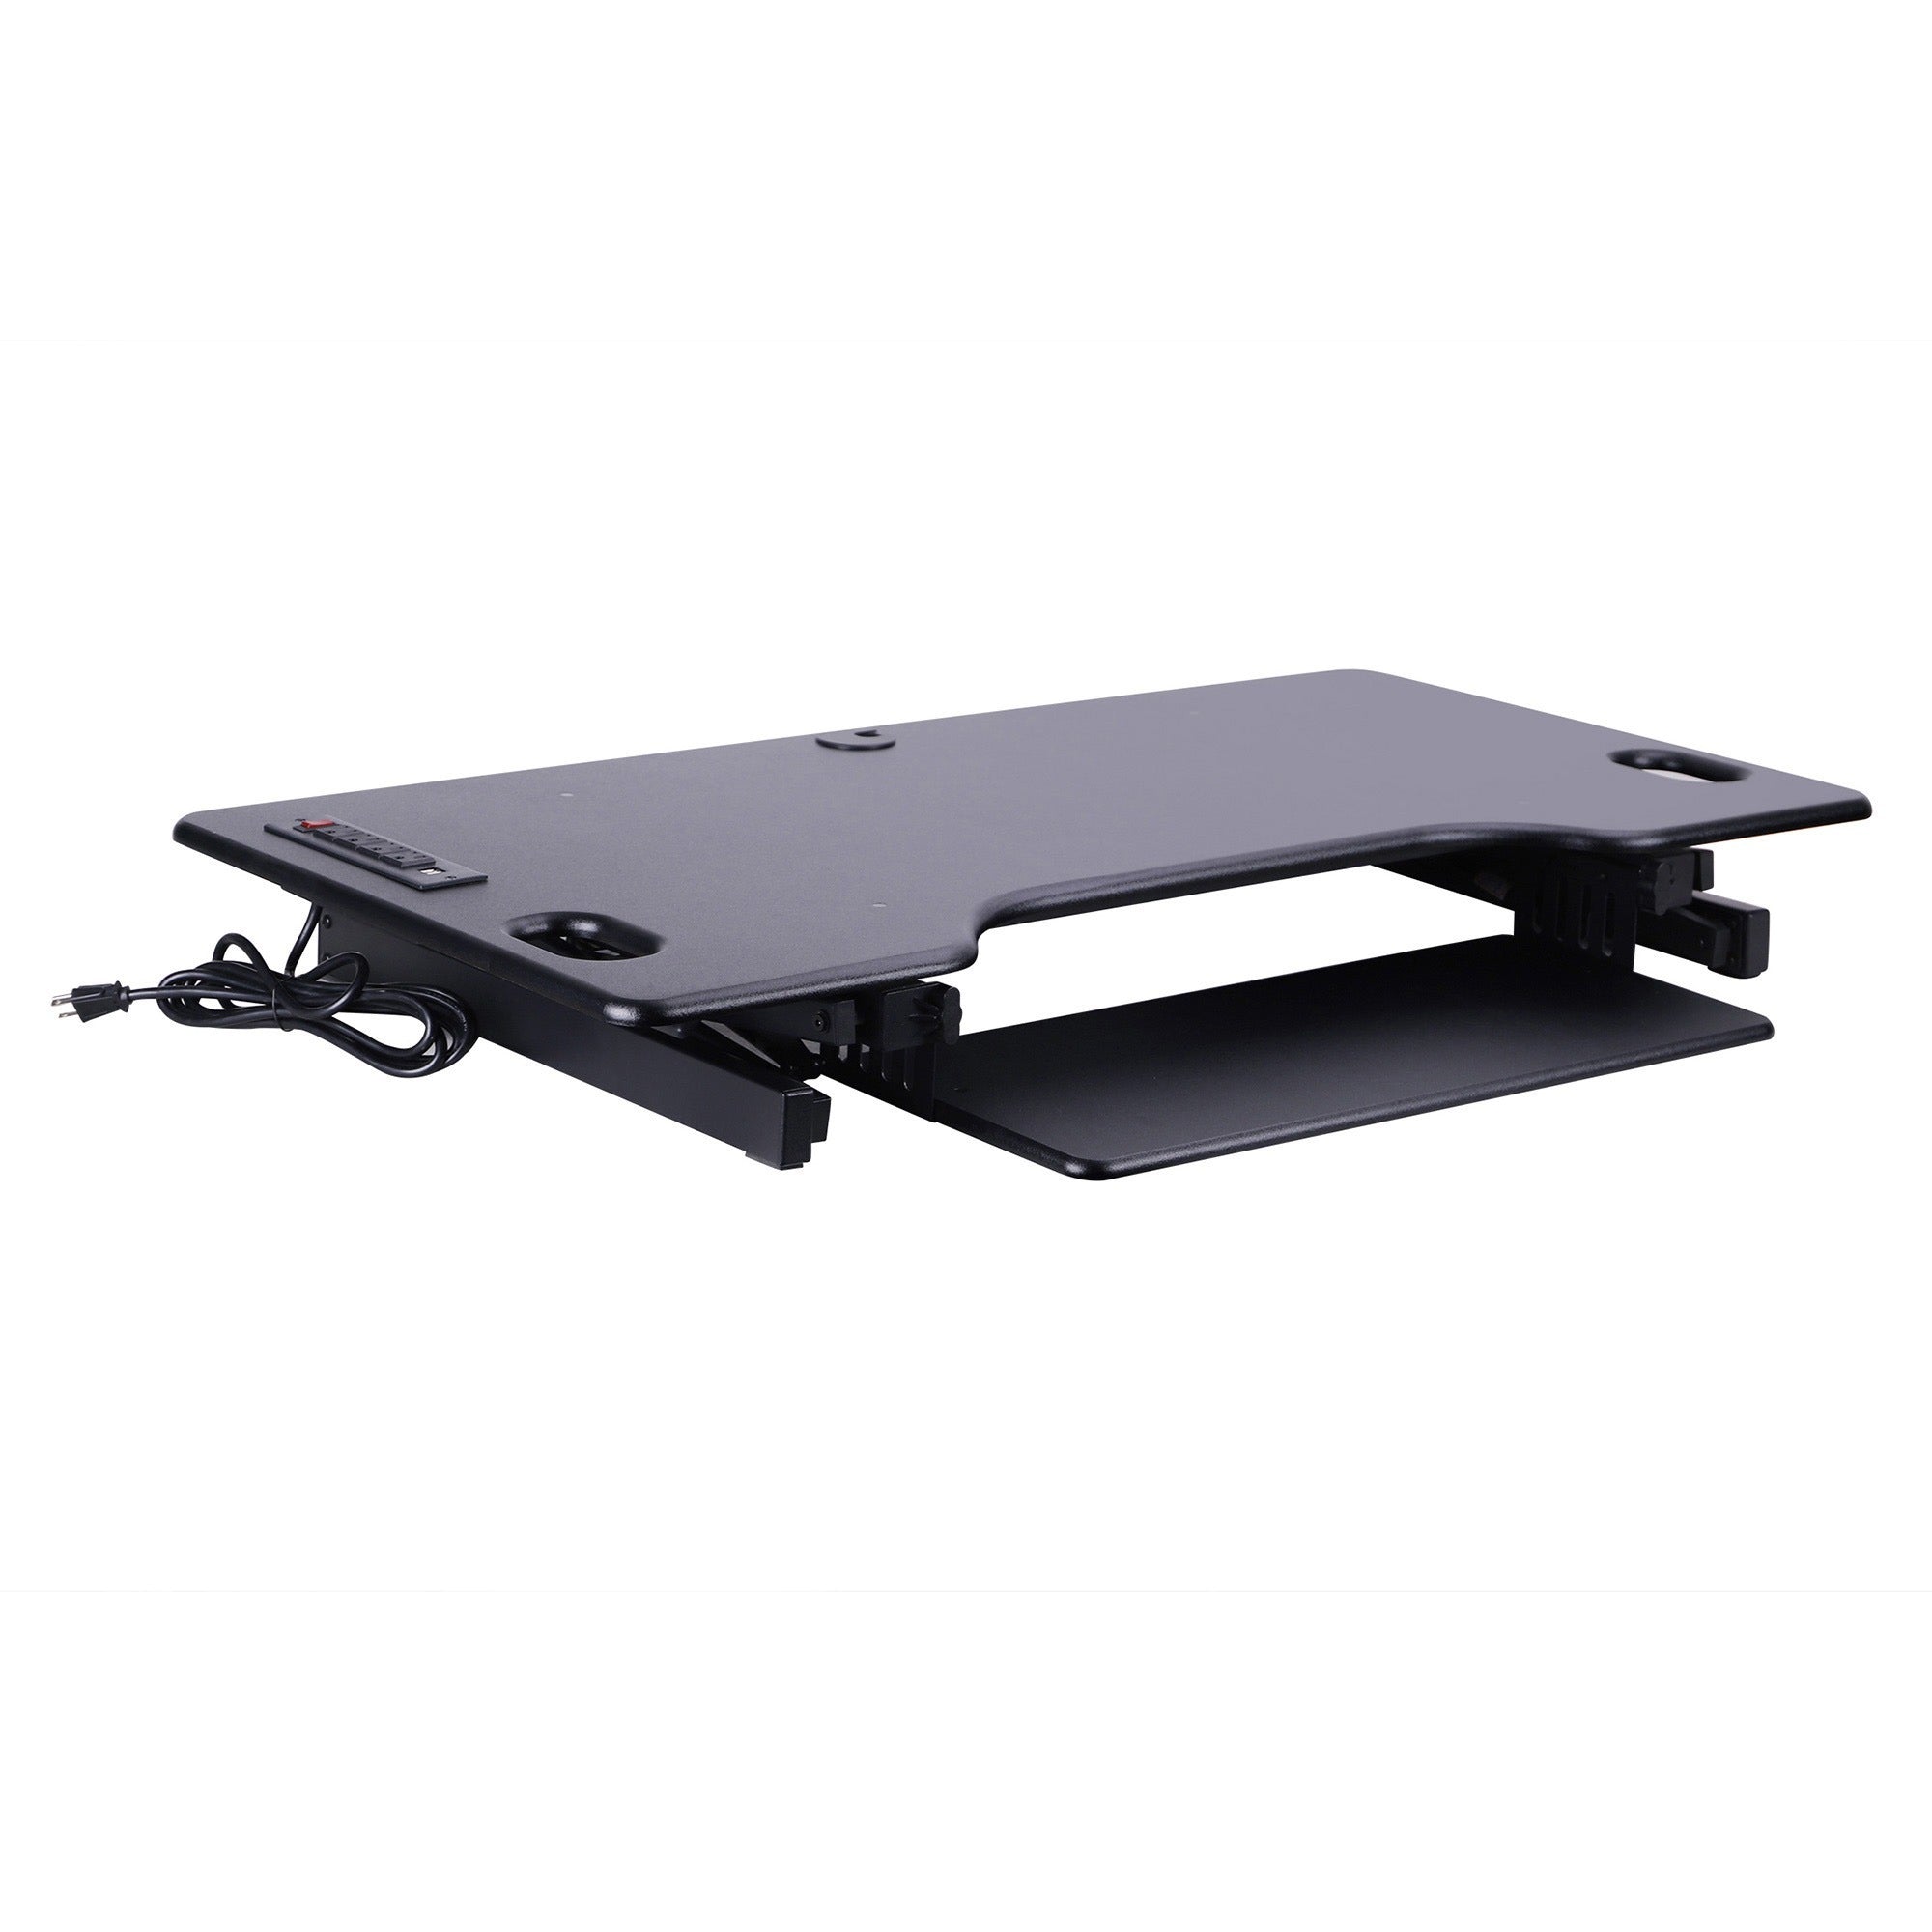 rocelco-sit-stand-desk-riser-45-lb-load-capacity-20-height-x-458-width-x-238-depth-black_rclrdadrb46a - 2